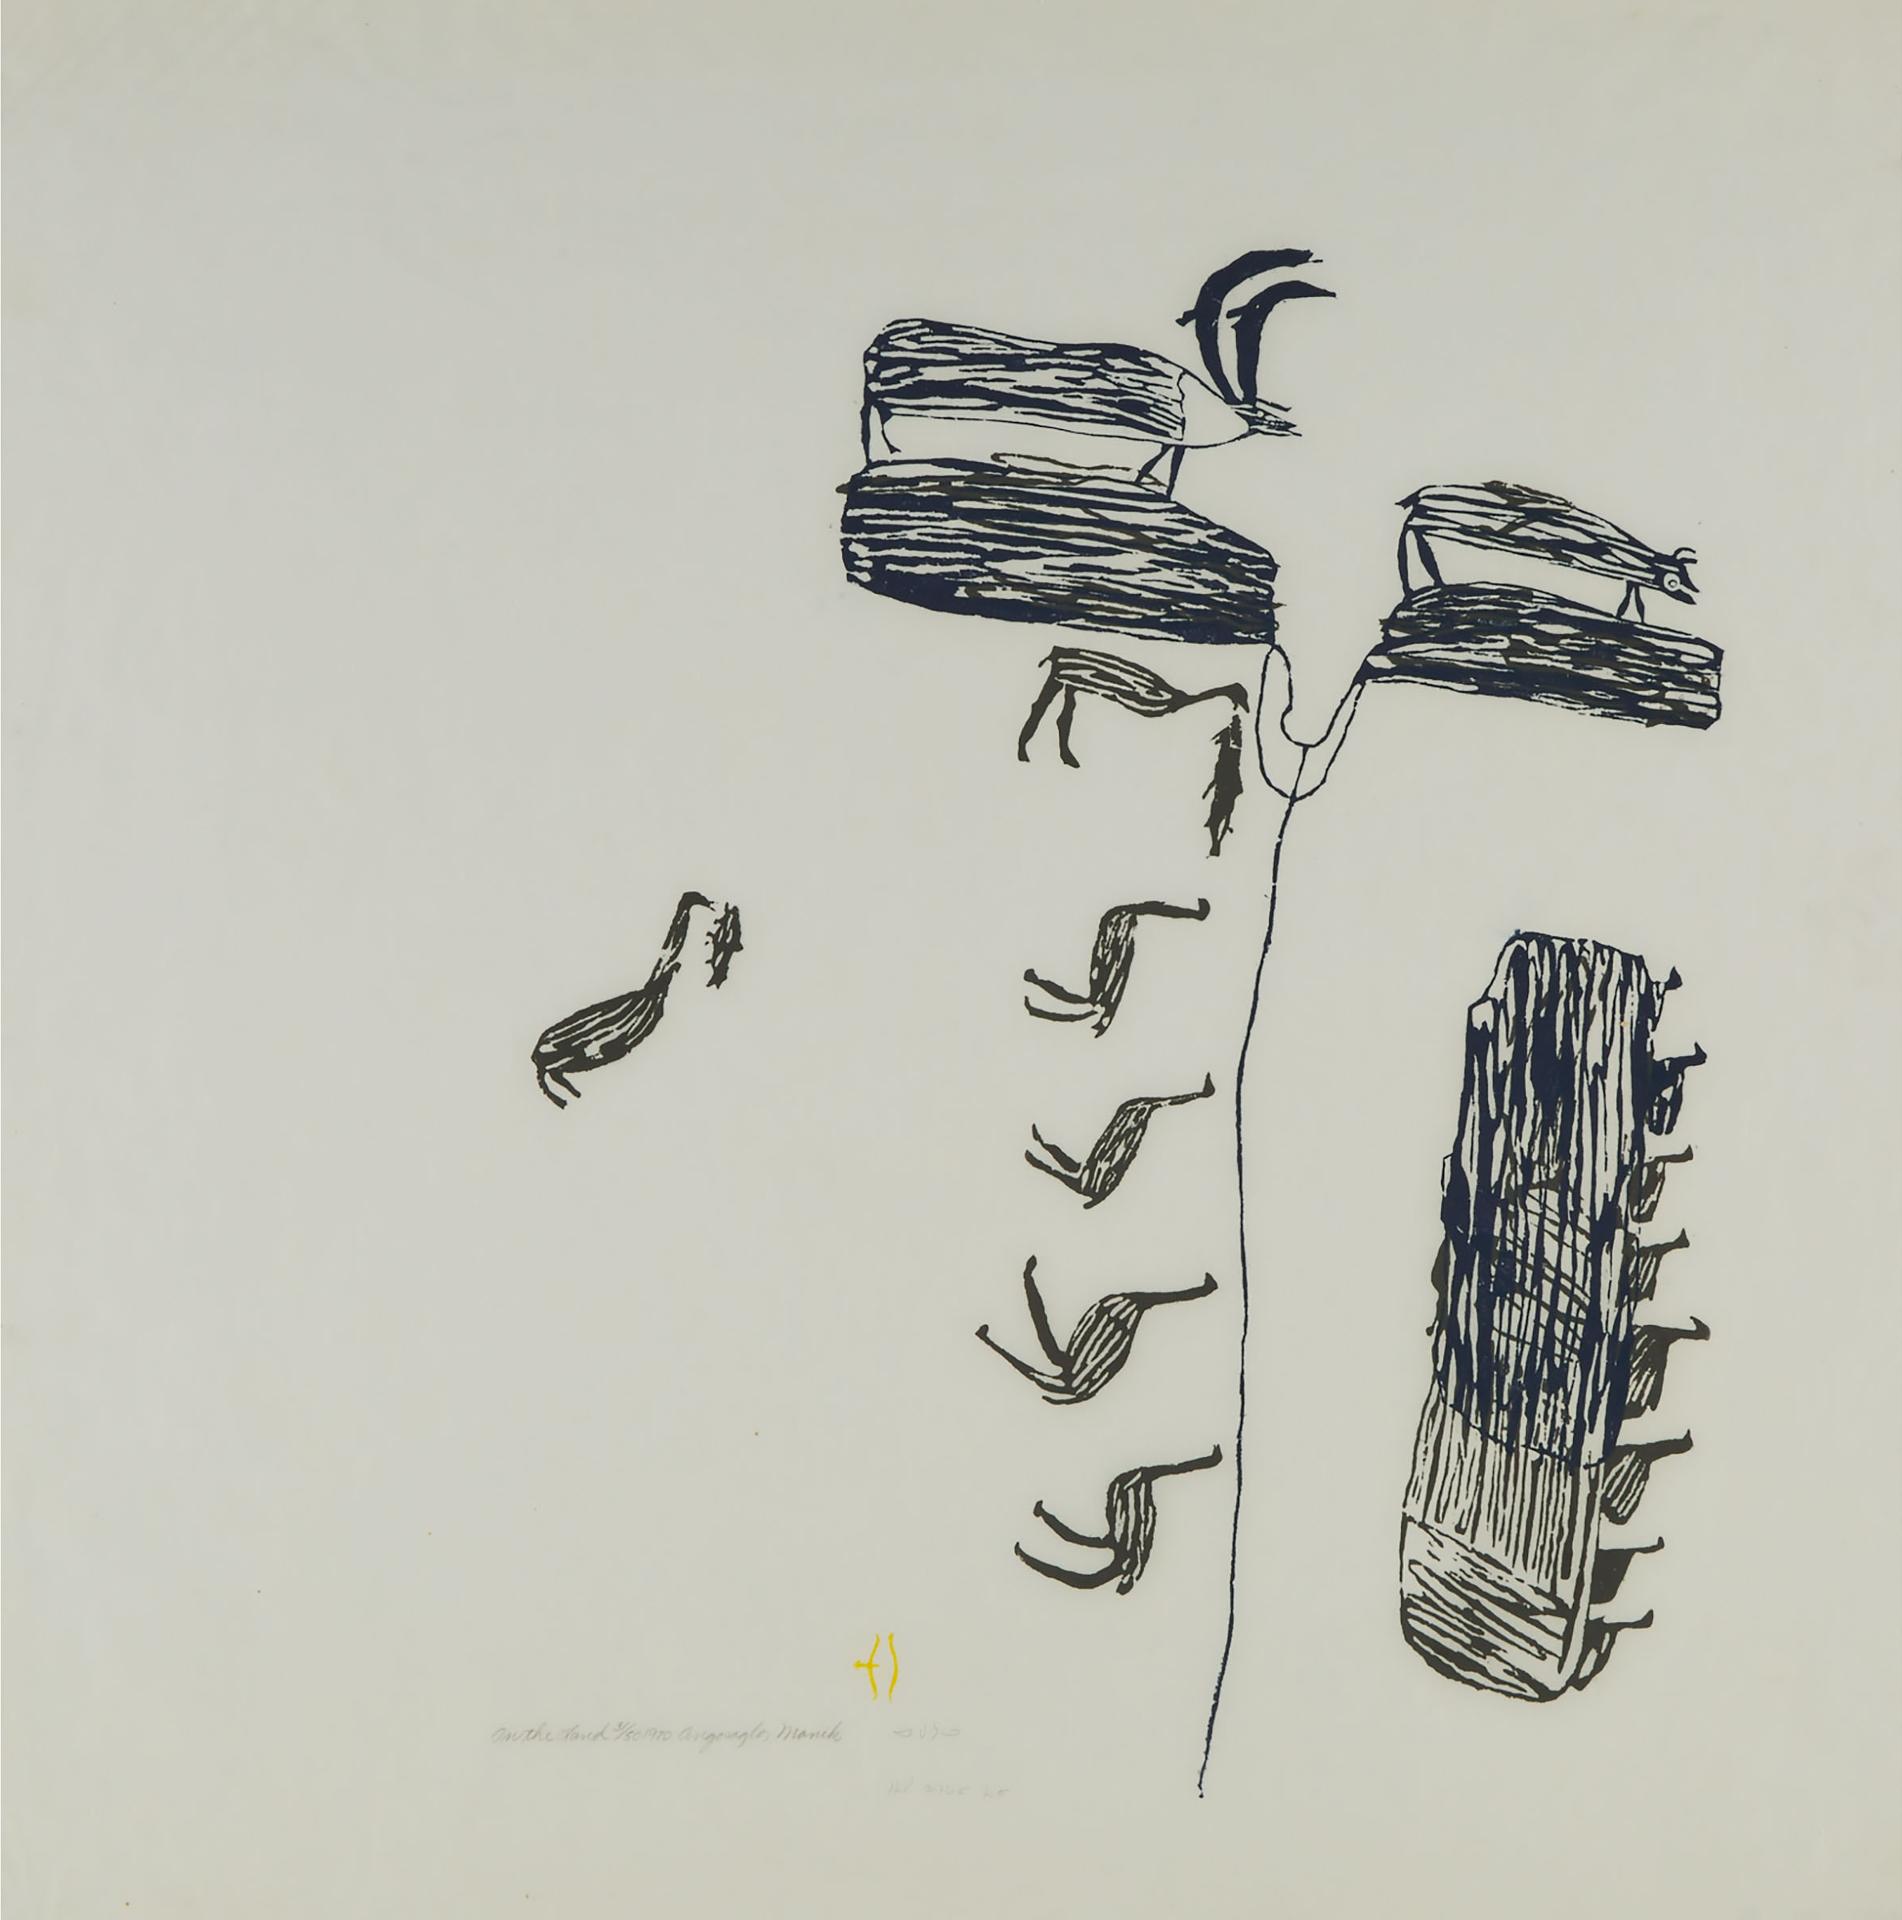 Luke H.Amitnaaq Anguhadluq (1895-1982) - On The Land, 1970